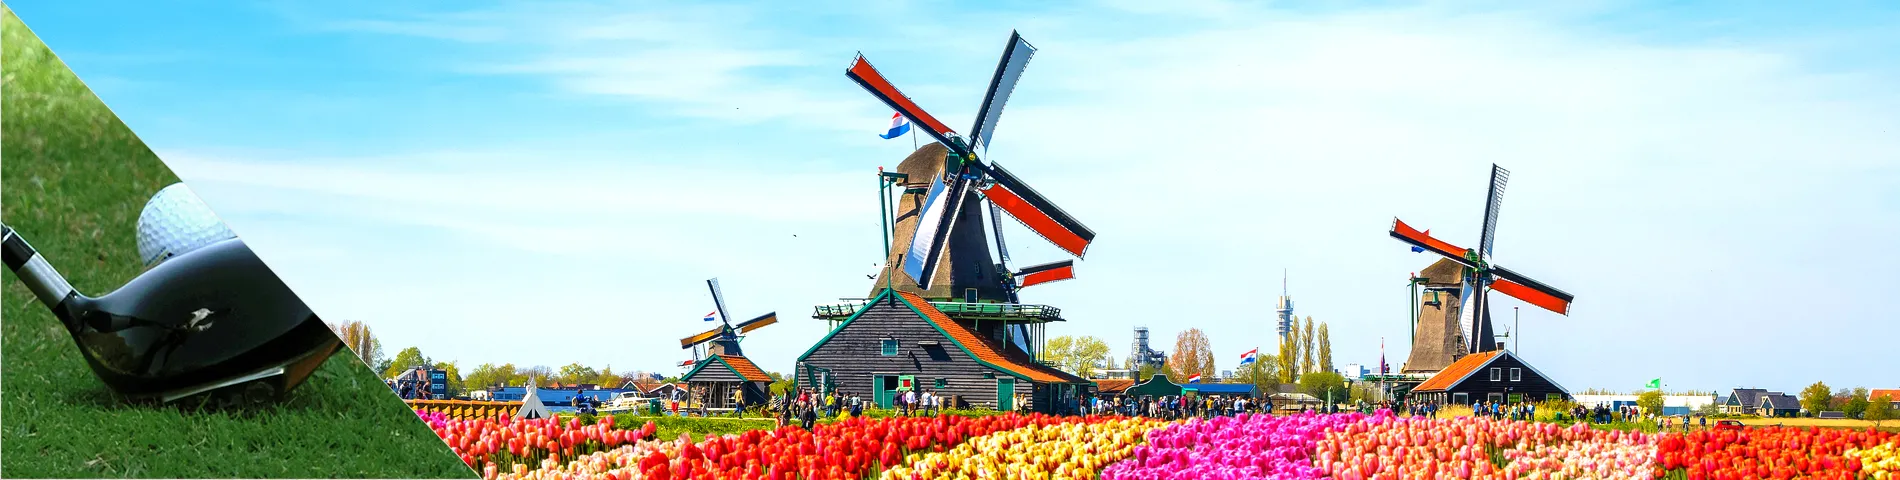 Nederland - Nederlands & golfen 